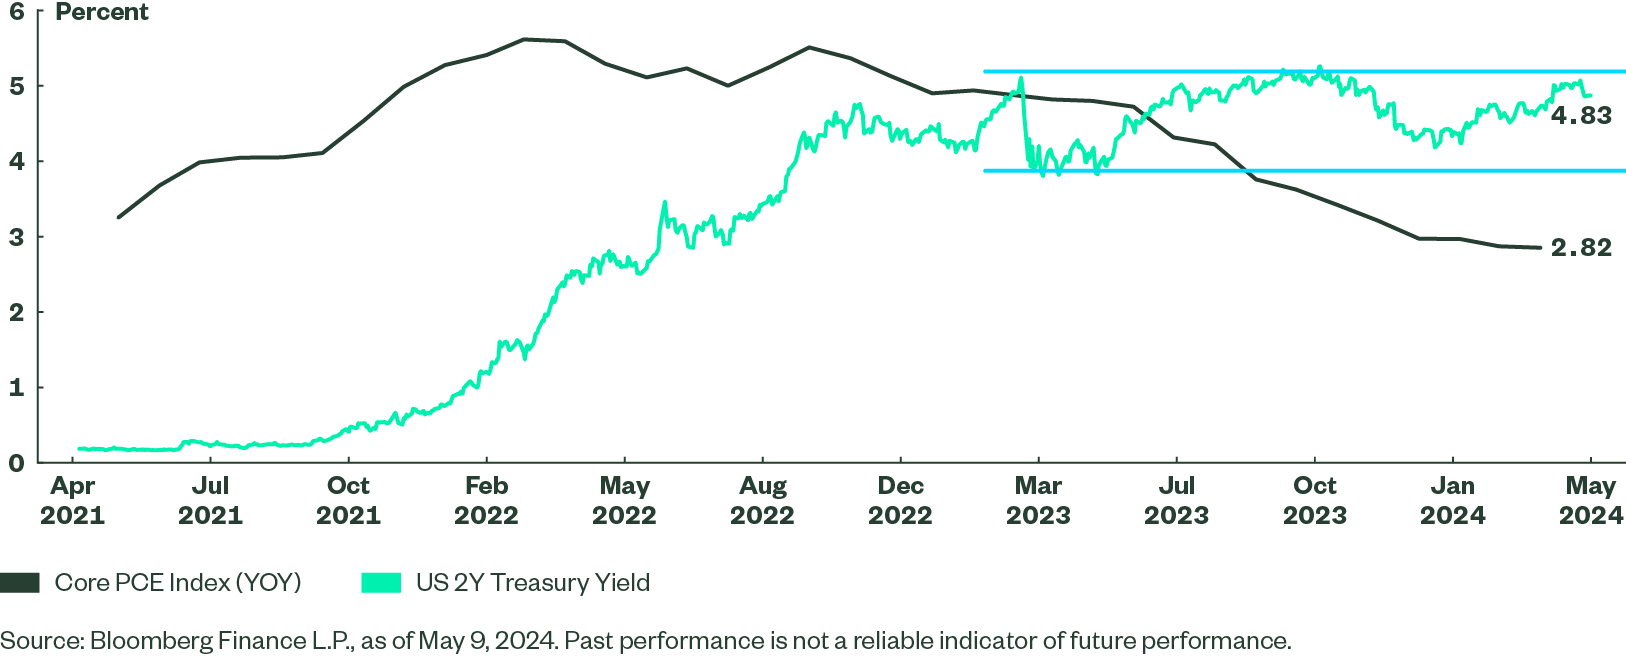 US Treasury Yields Remain in Range